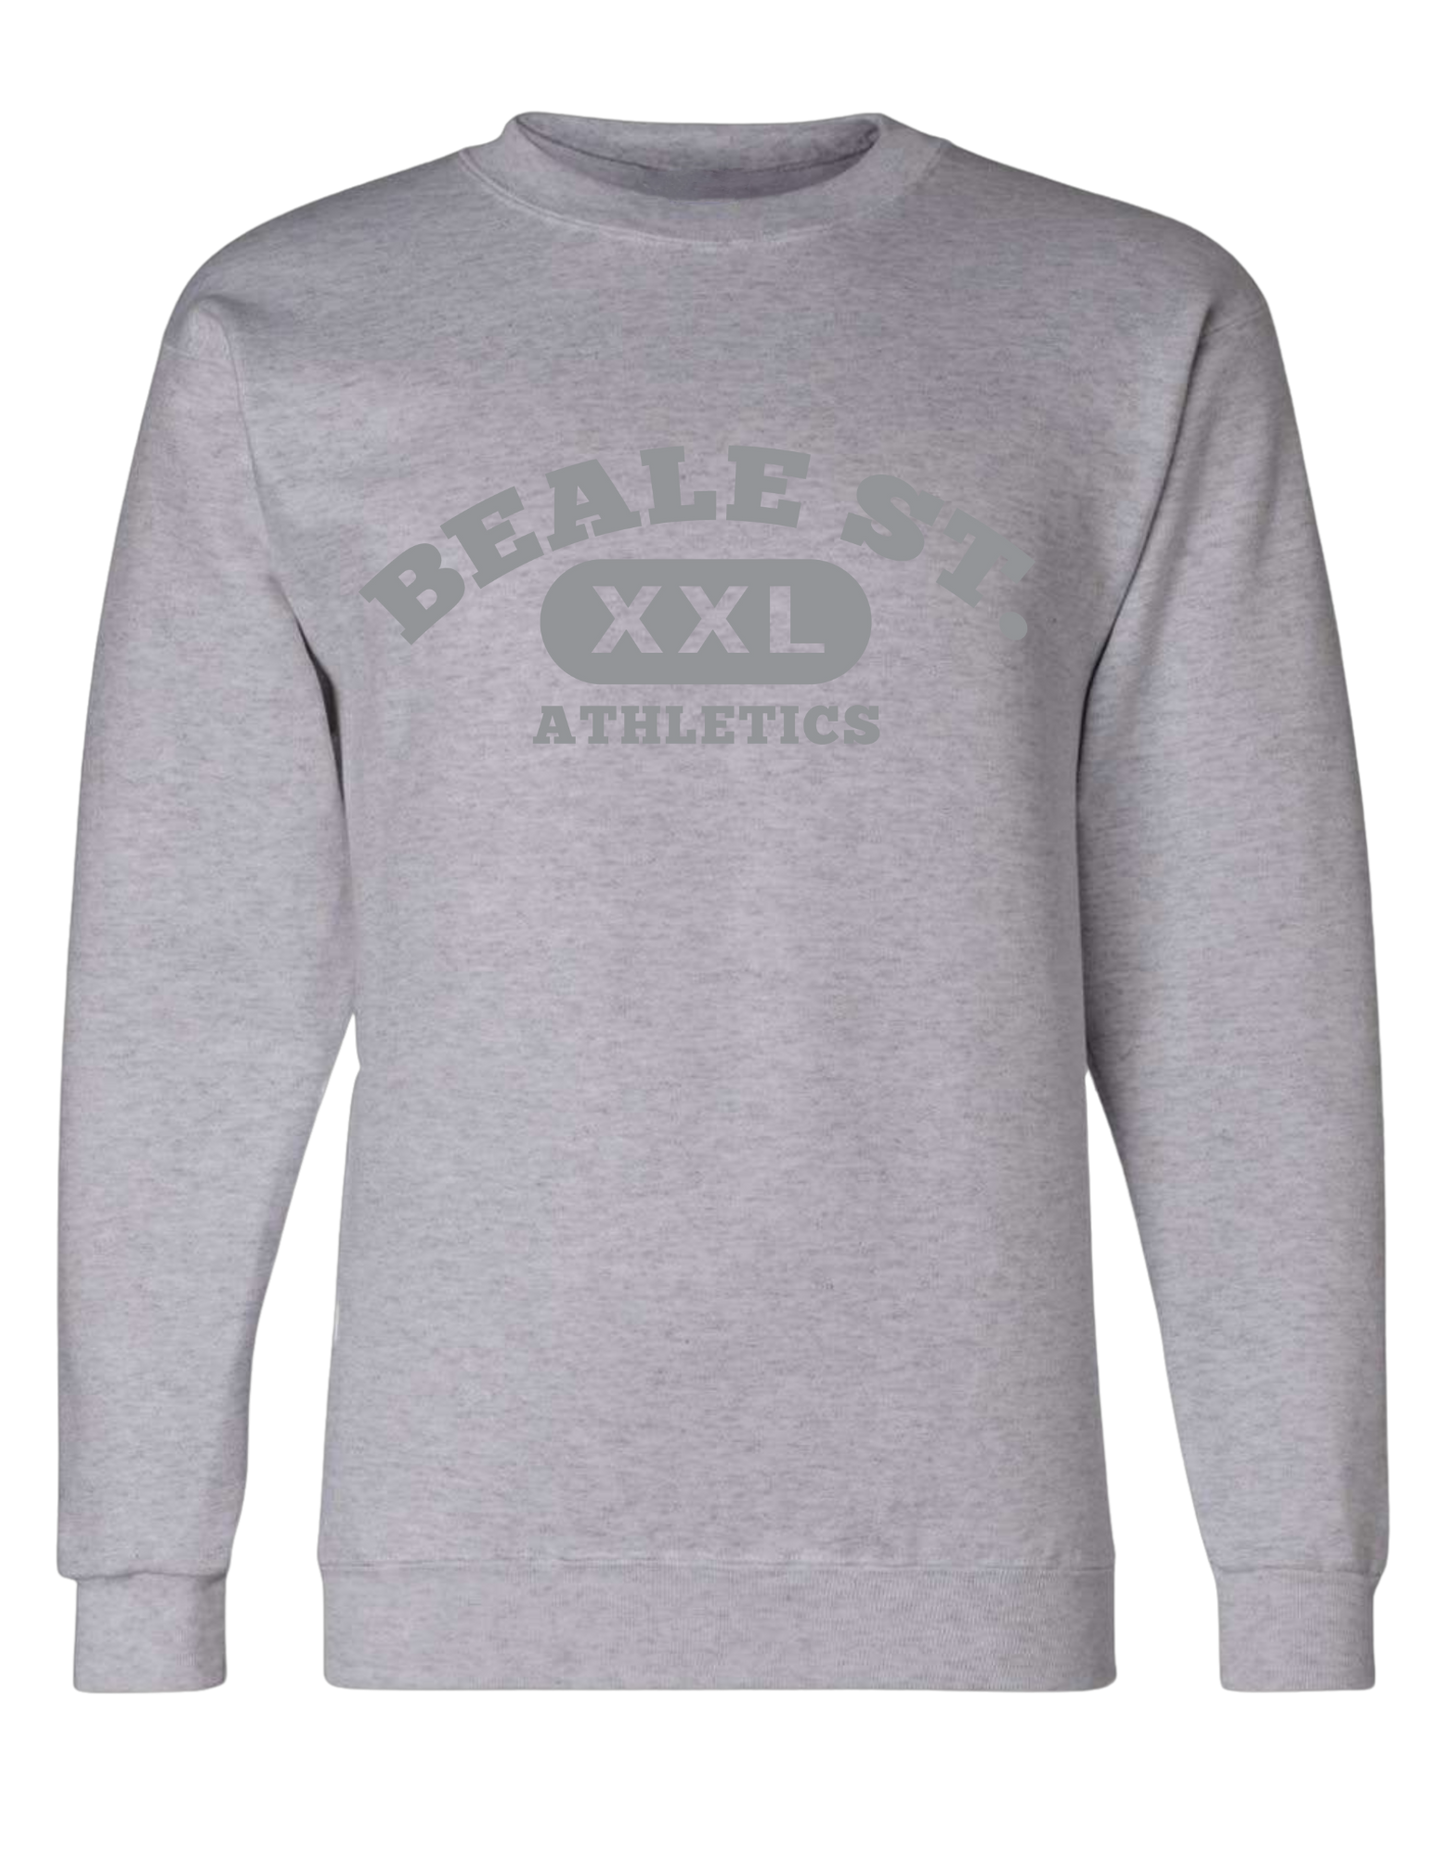 Beale Street Athletics Crew - Light Steel